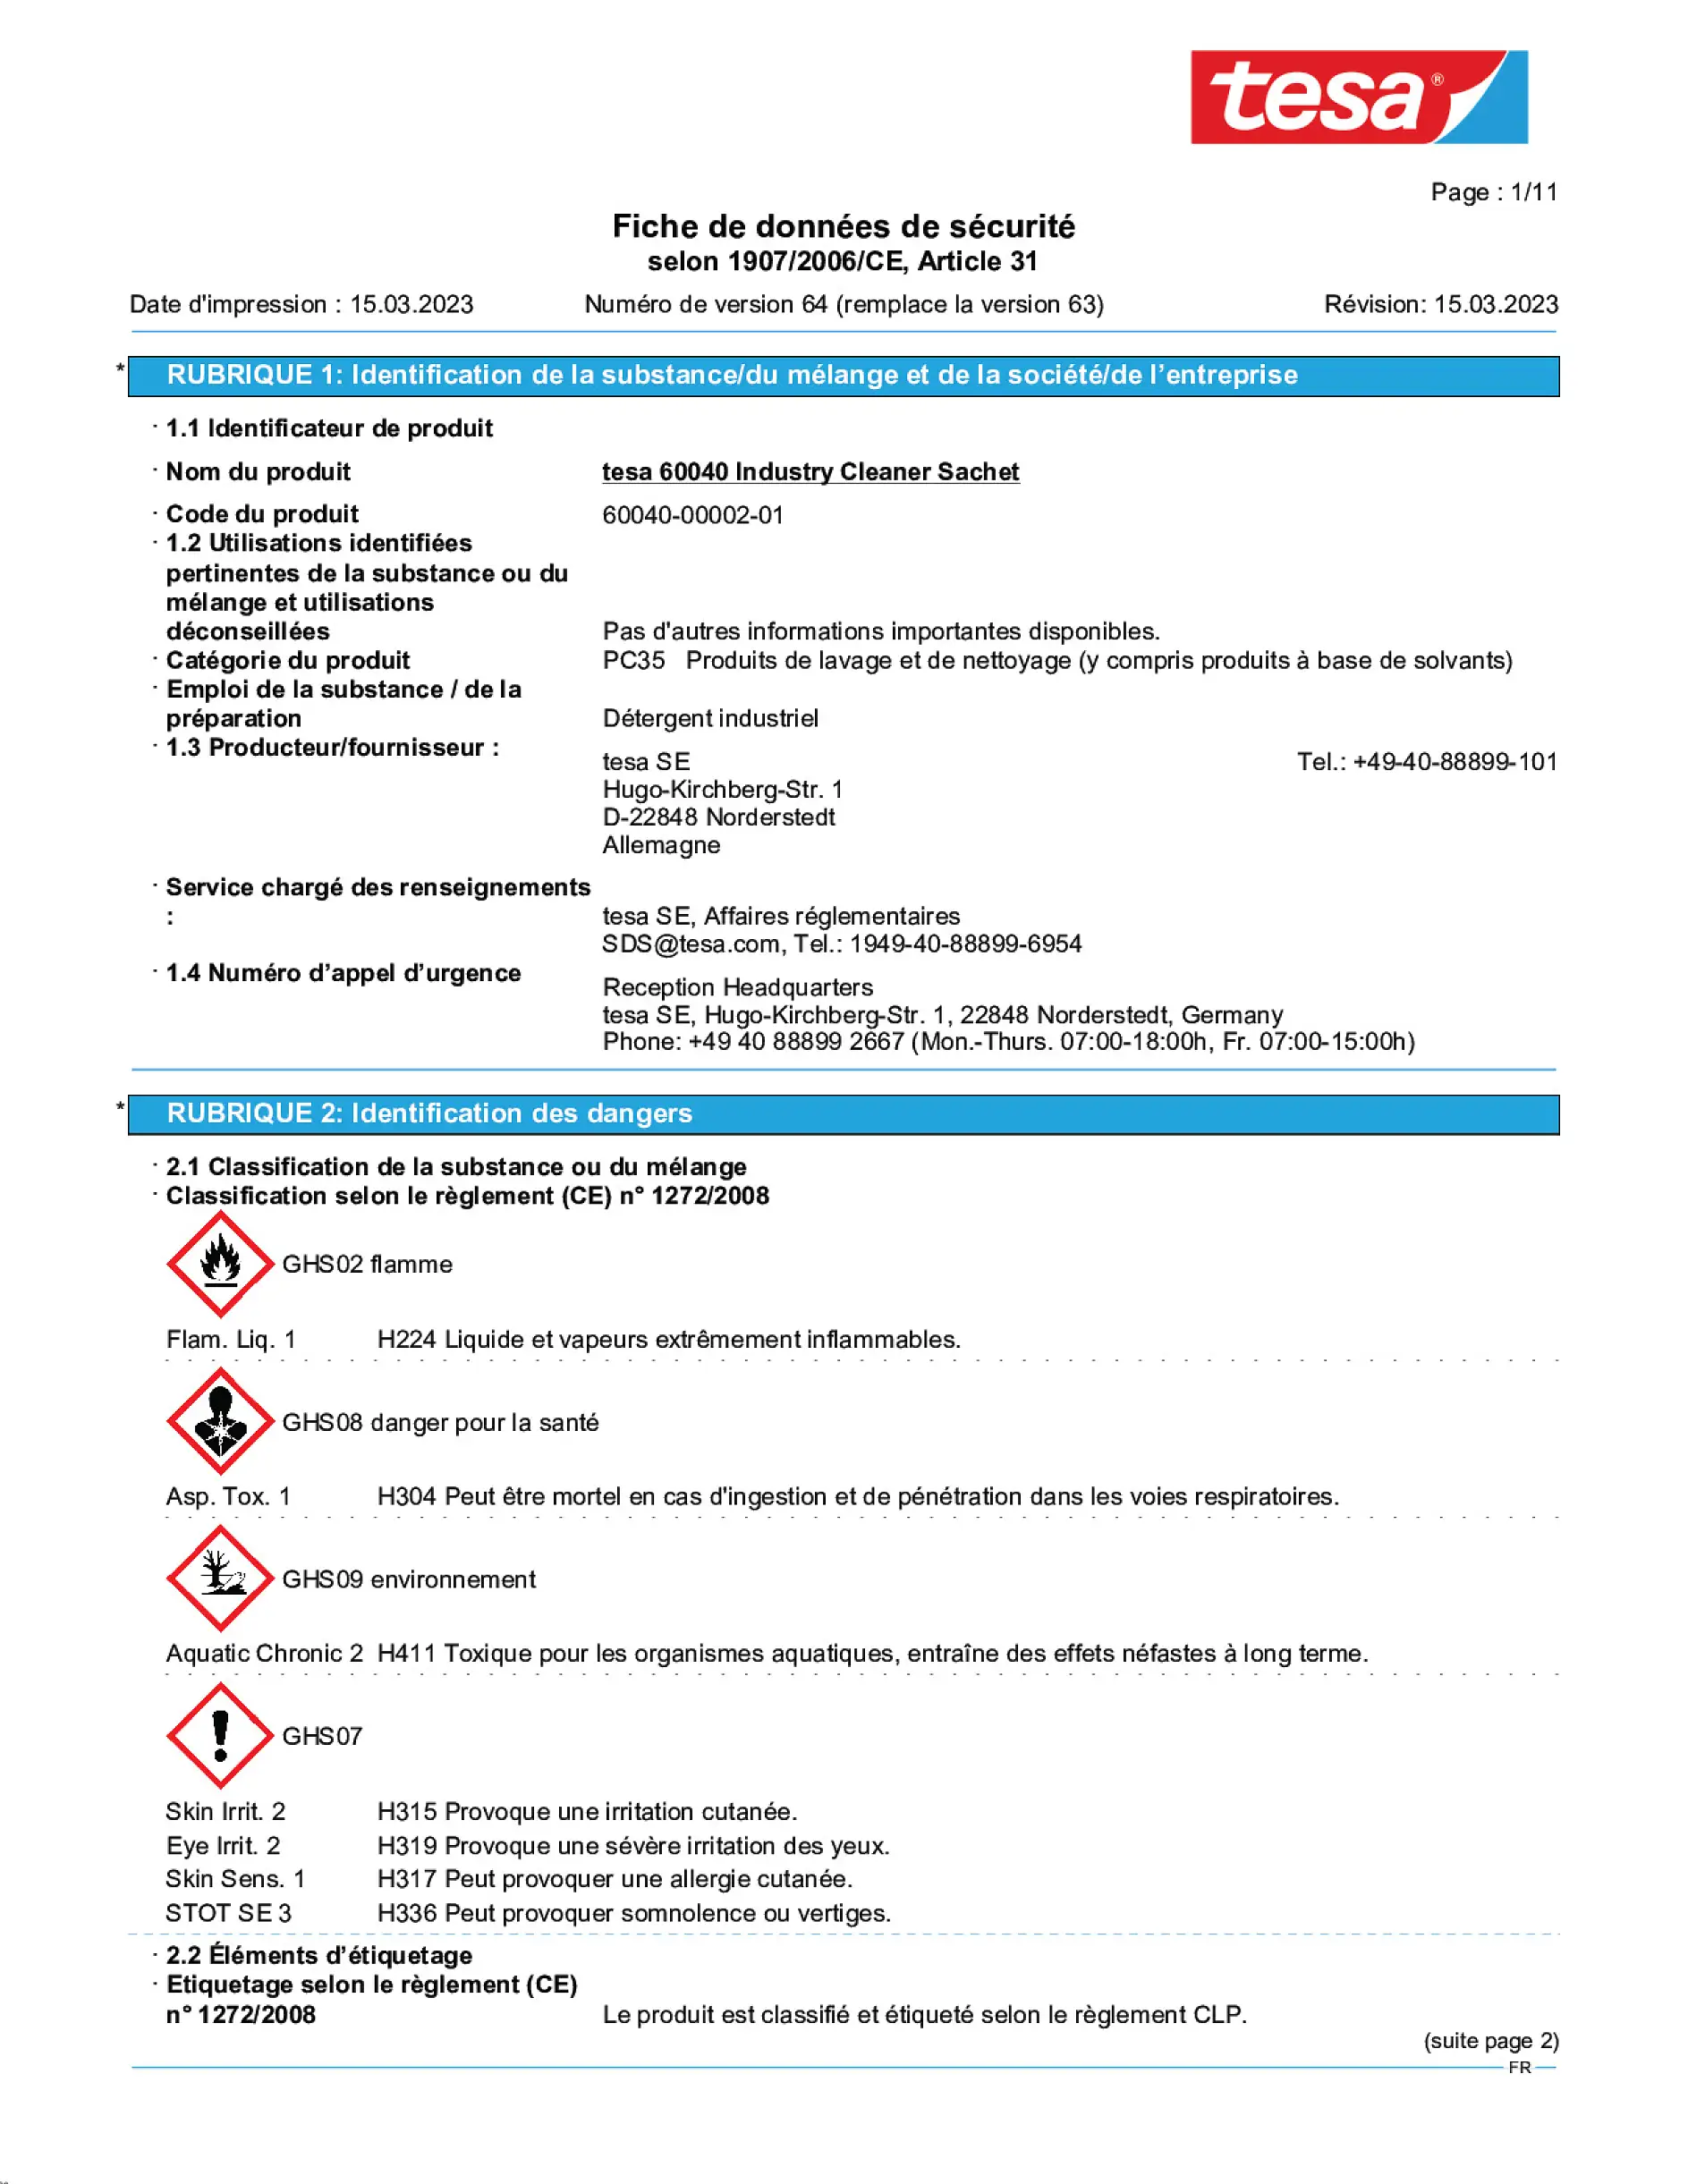 Safety data sheet_tesa® 60040_fr-FR_v64